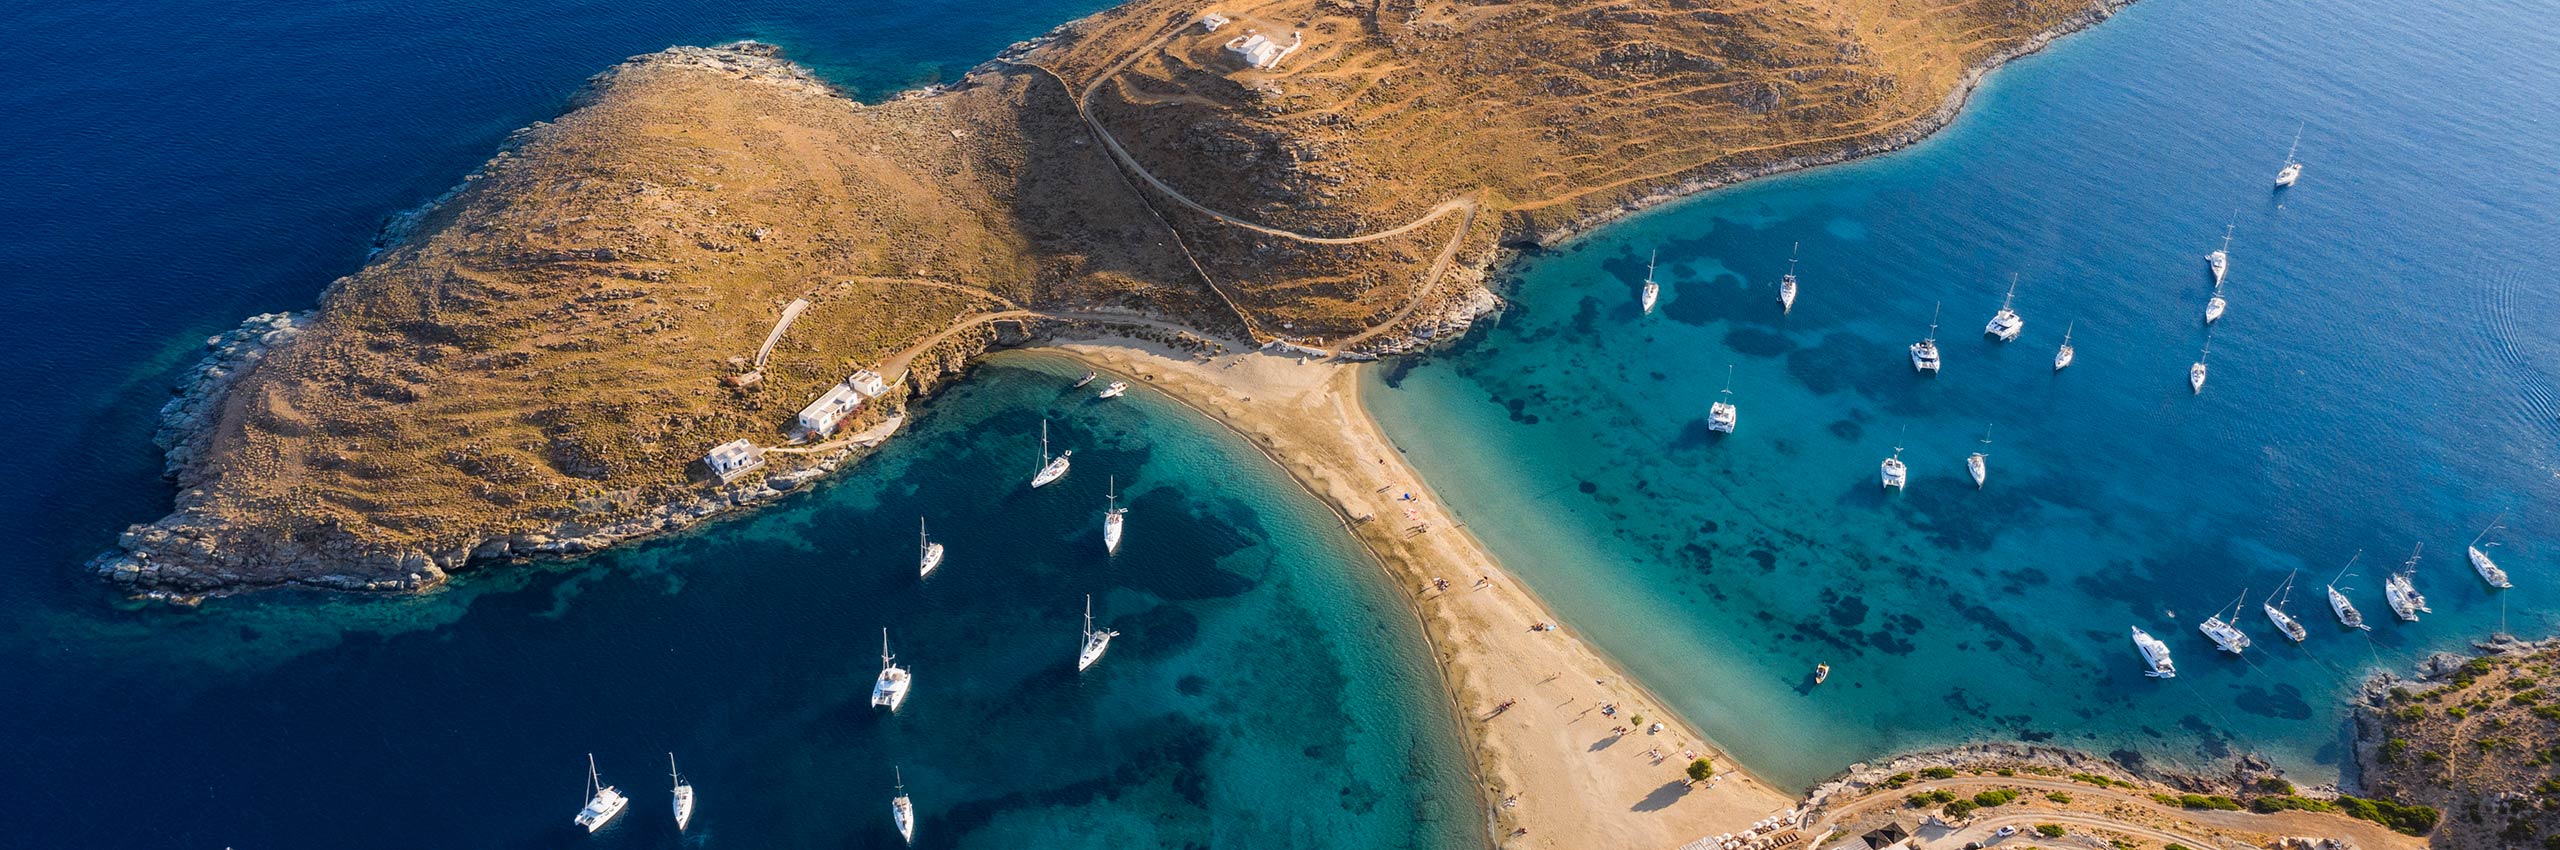 SIM-1232642 | Greece/Aegean islands, Cyclades, Kythnos island | © Massimo Ripani/4Corners